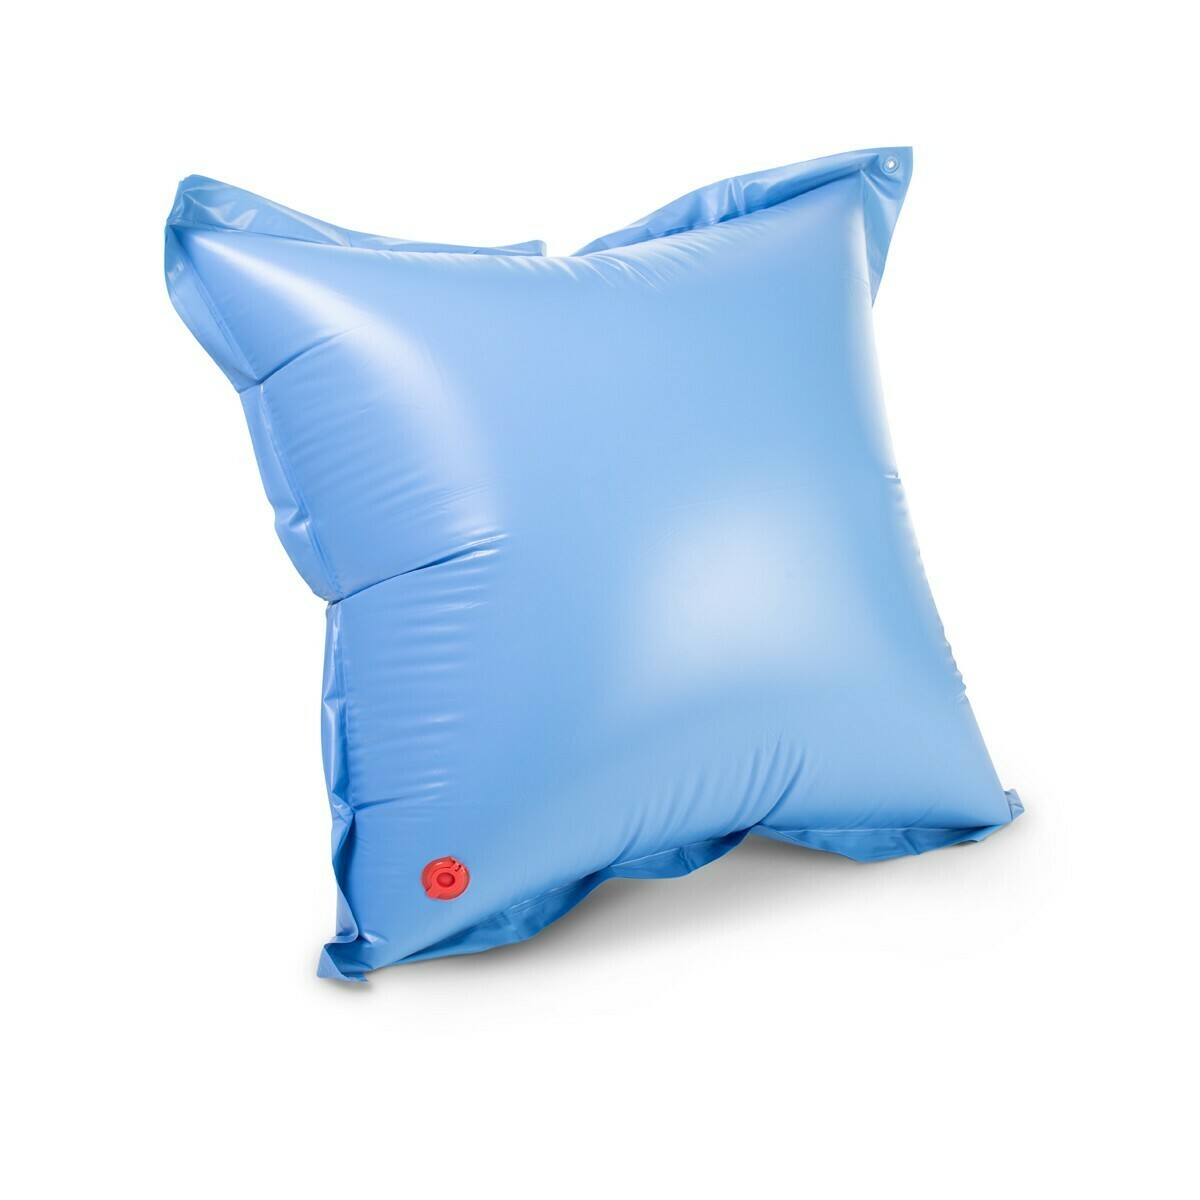 4 x 4 Air Pillow